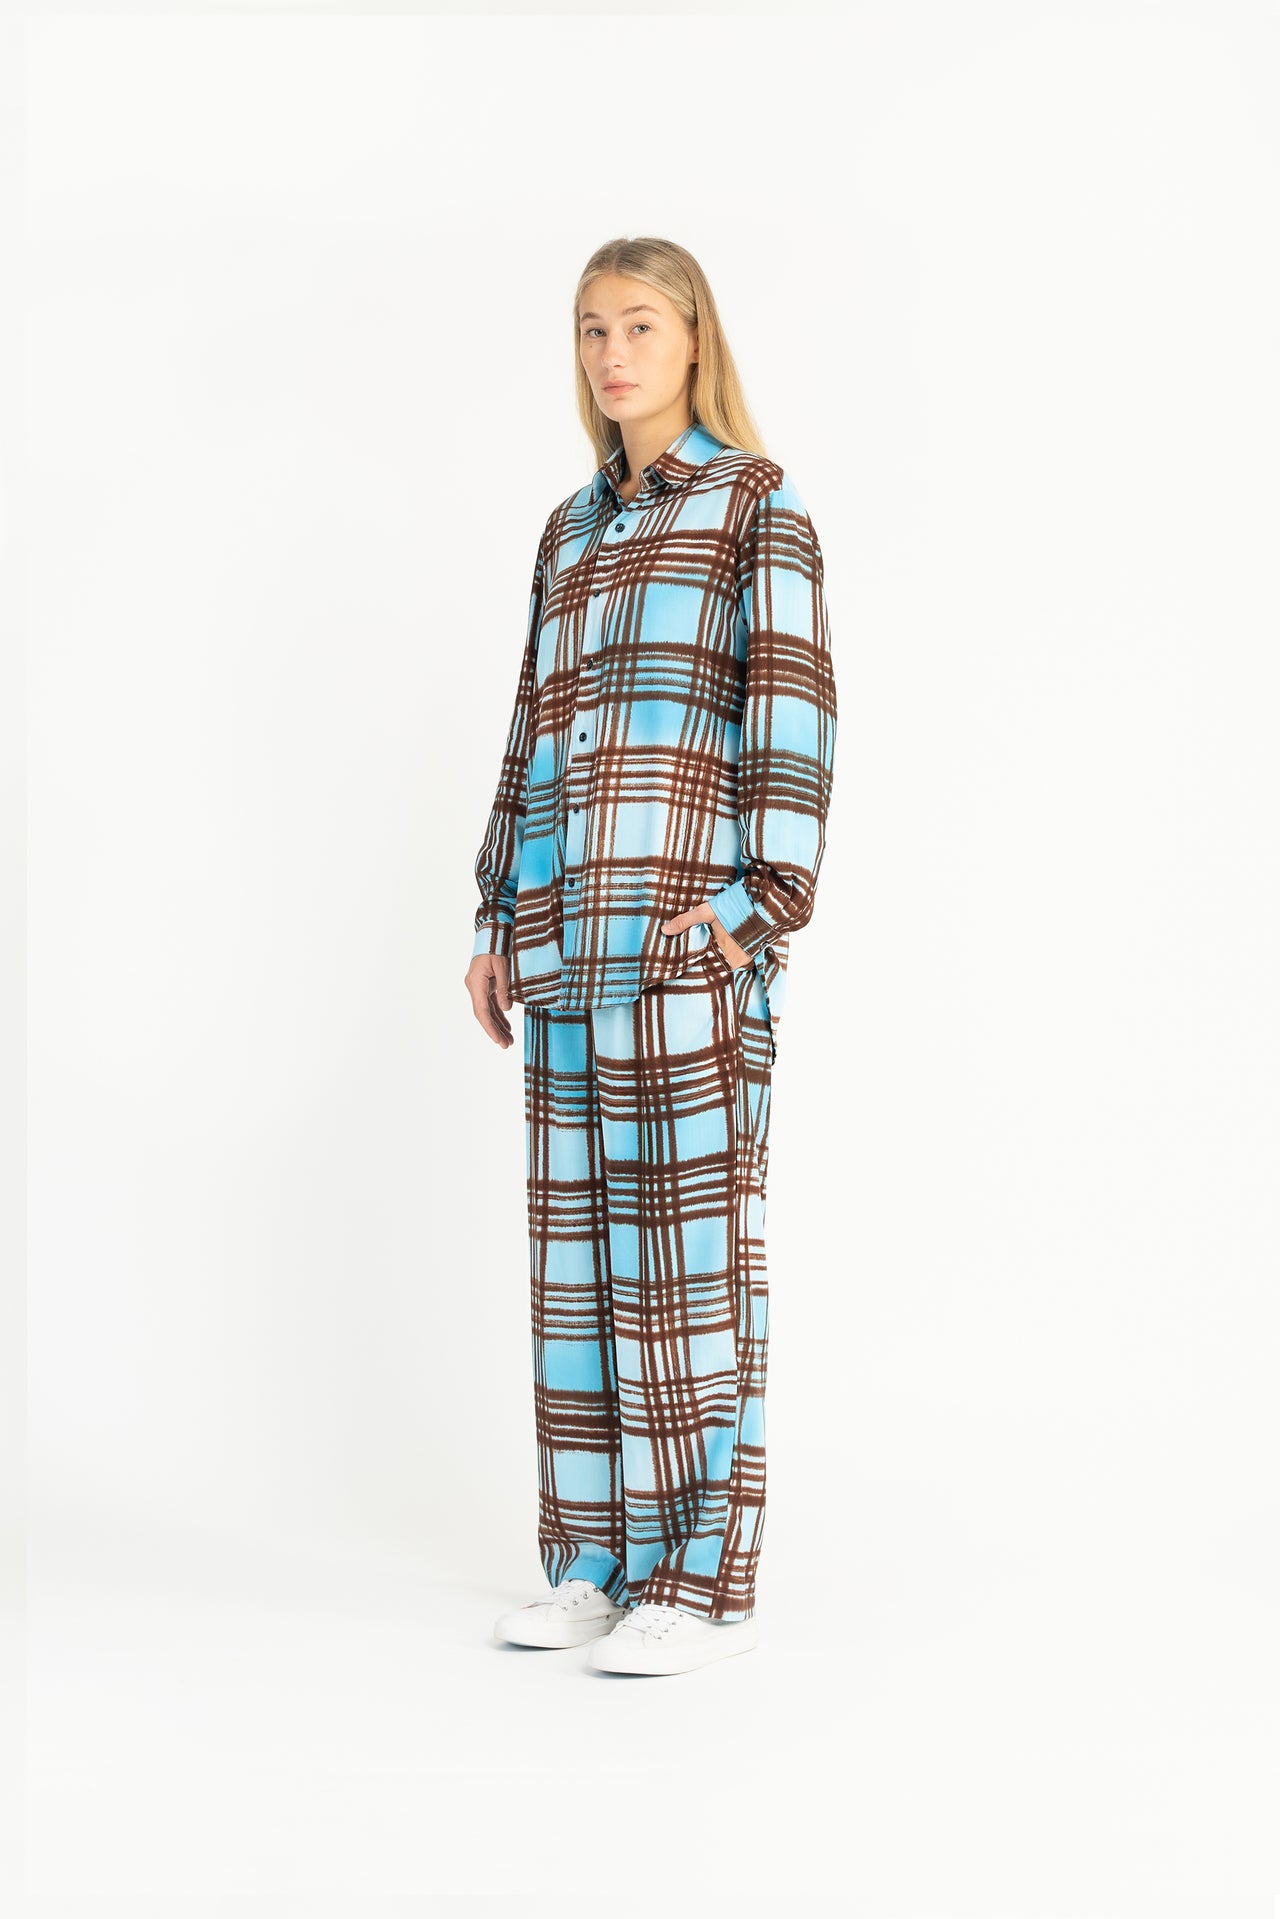 Milkbar Winter Pyjamas